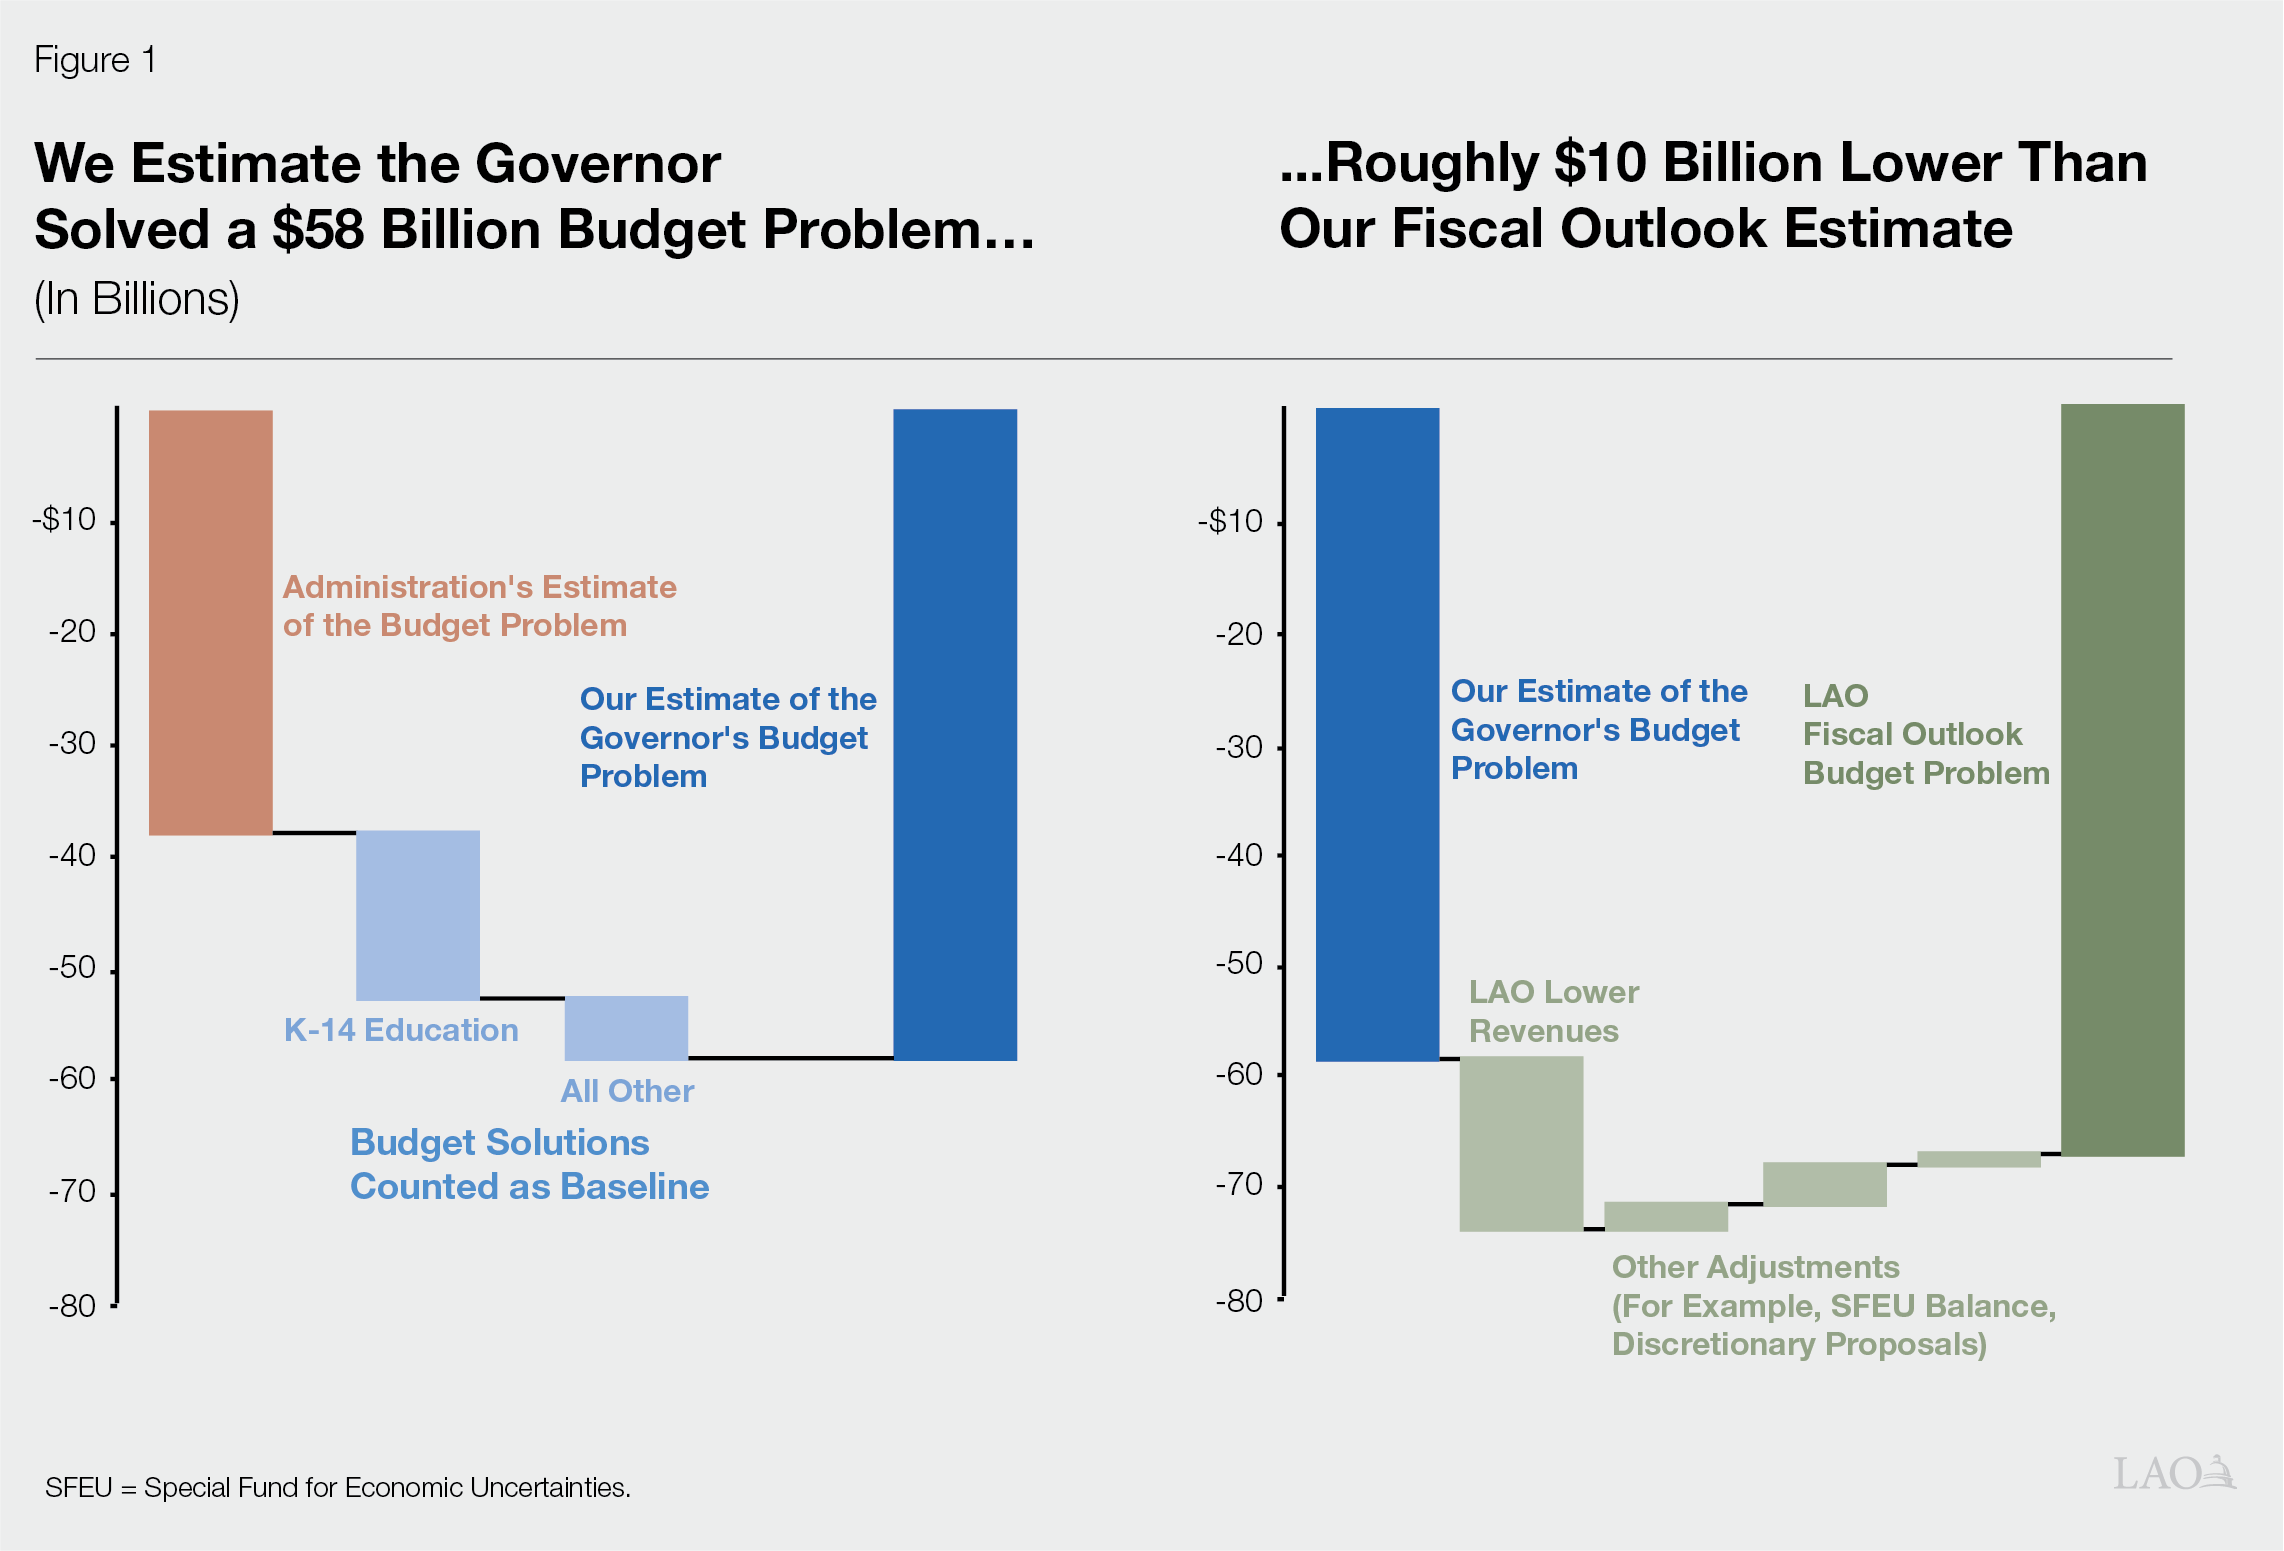 Figure 1 - We Estimate the Governor Solved a $58 Billion Budget Problem - Roughly $10 Billion Lower than Our December Estimate